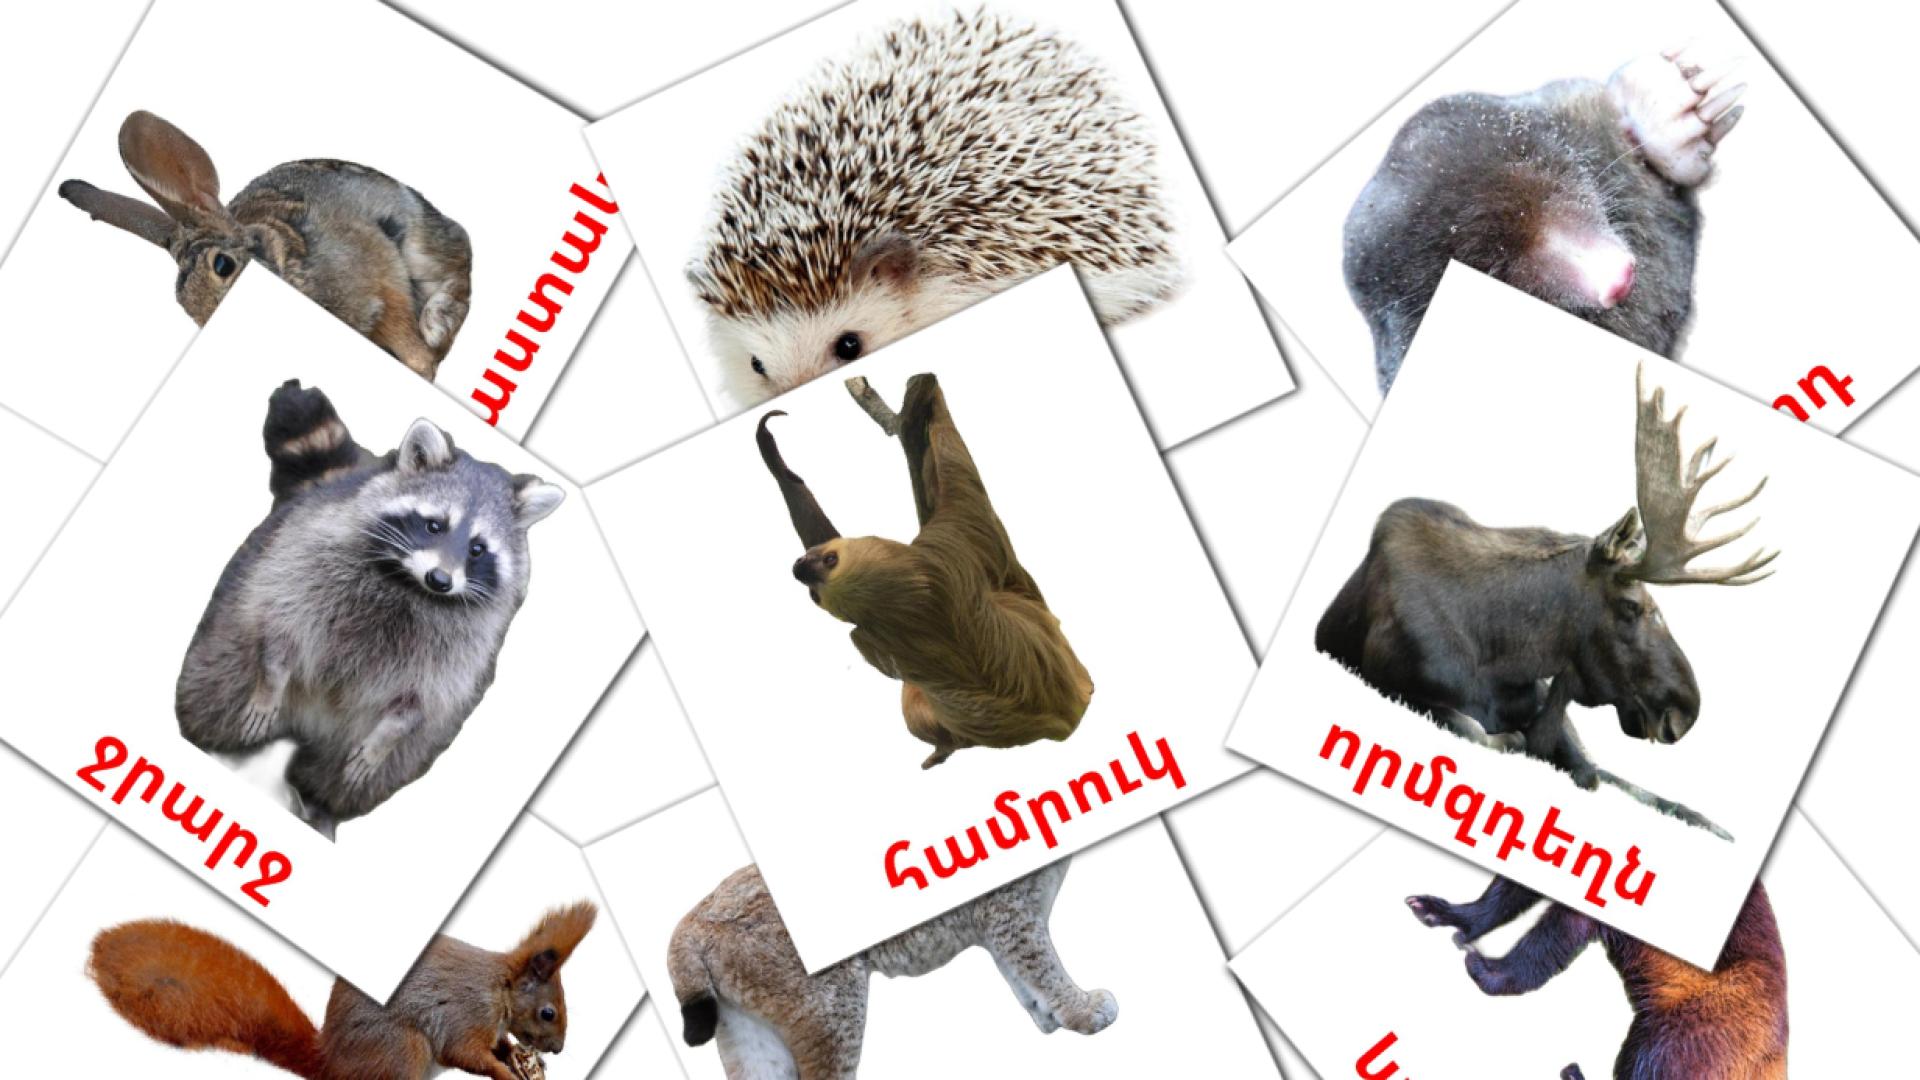 Forest animals - armenian vocabulary cards